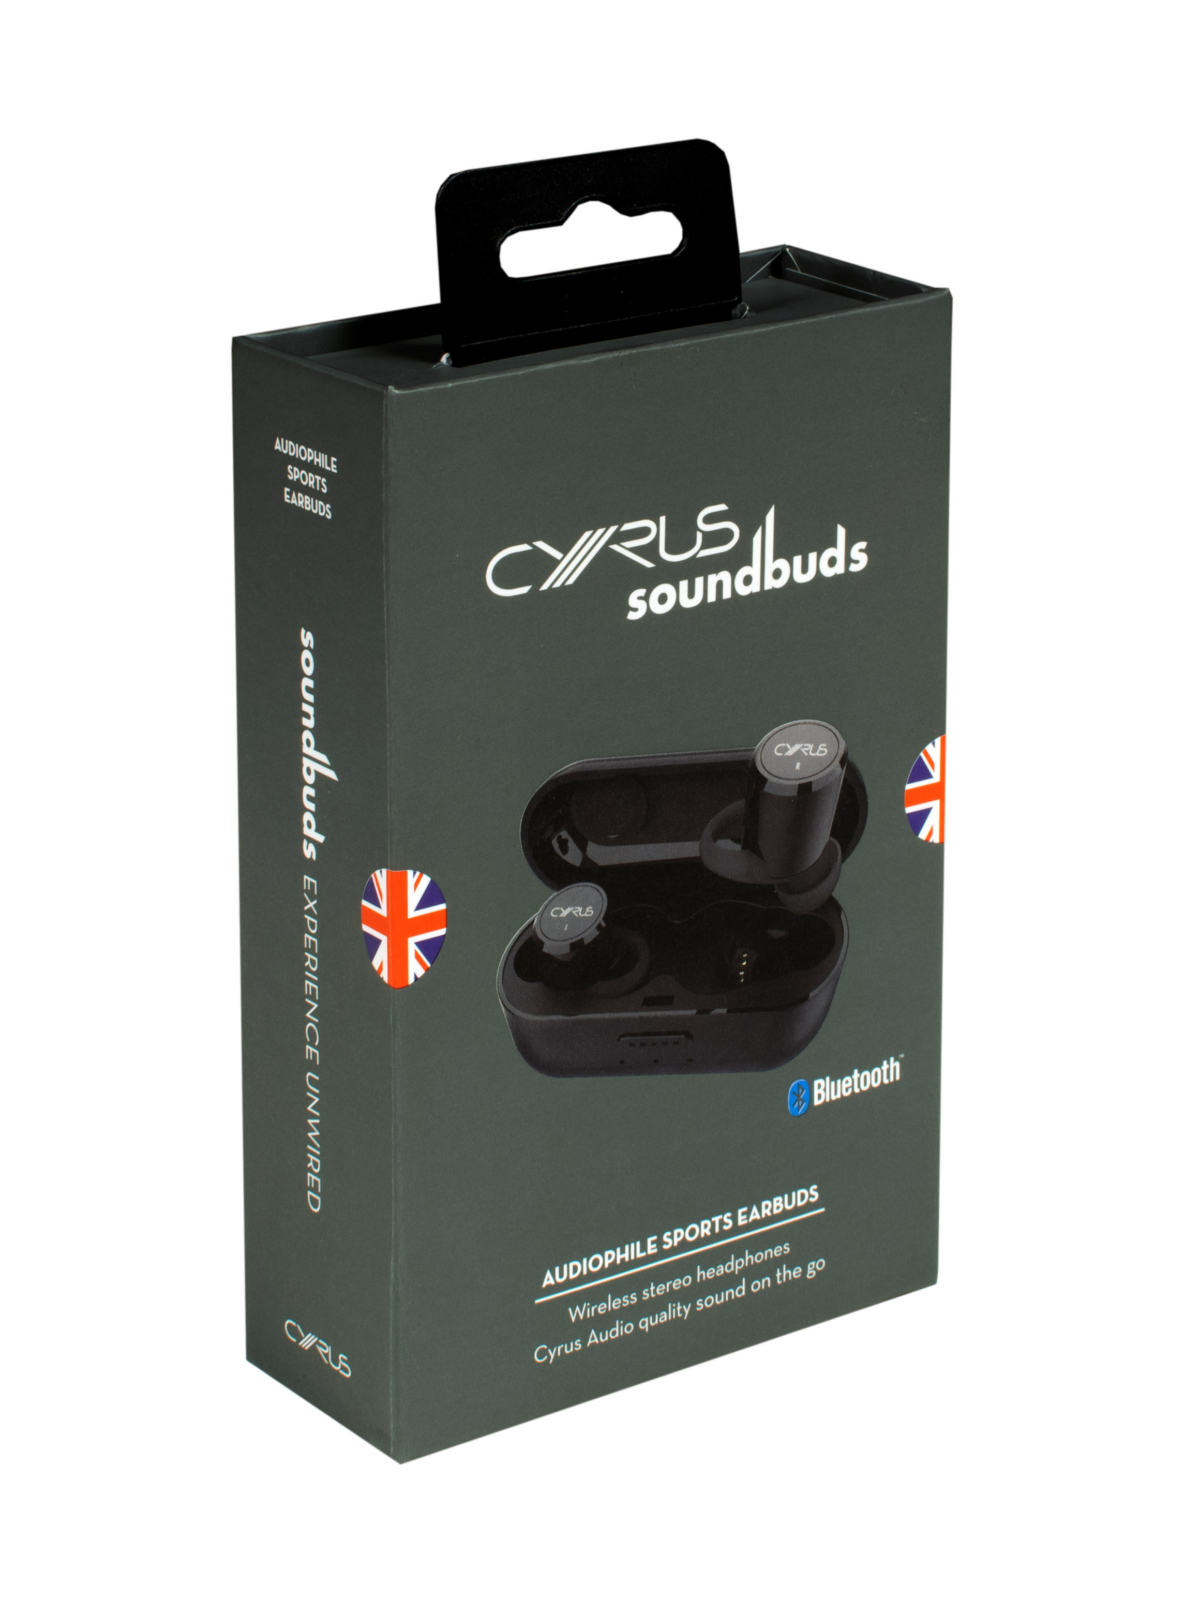 Cyrus Soundbuds Audiophile Sports Earbuds Black